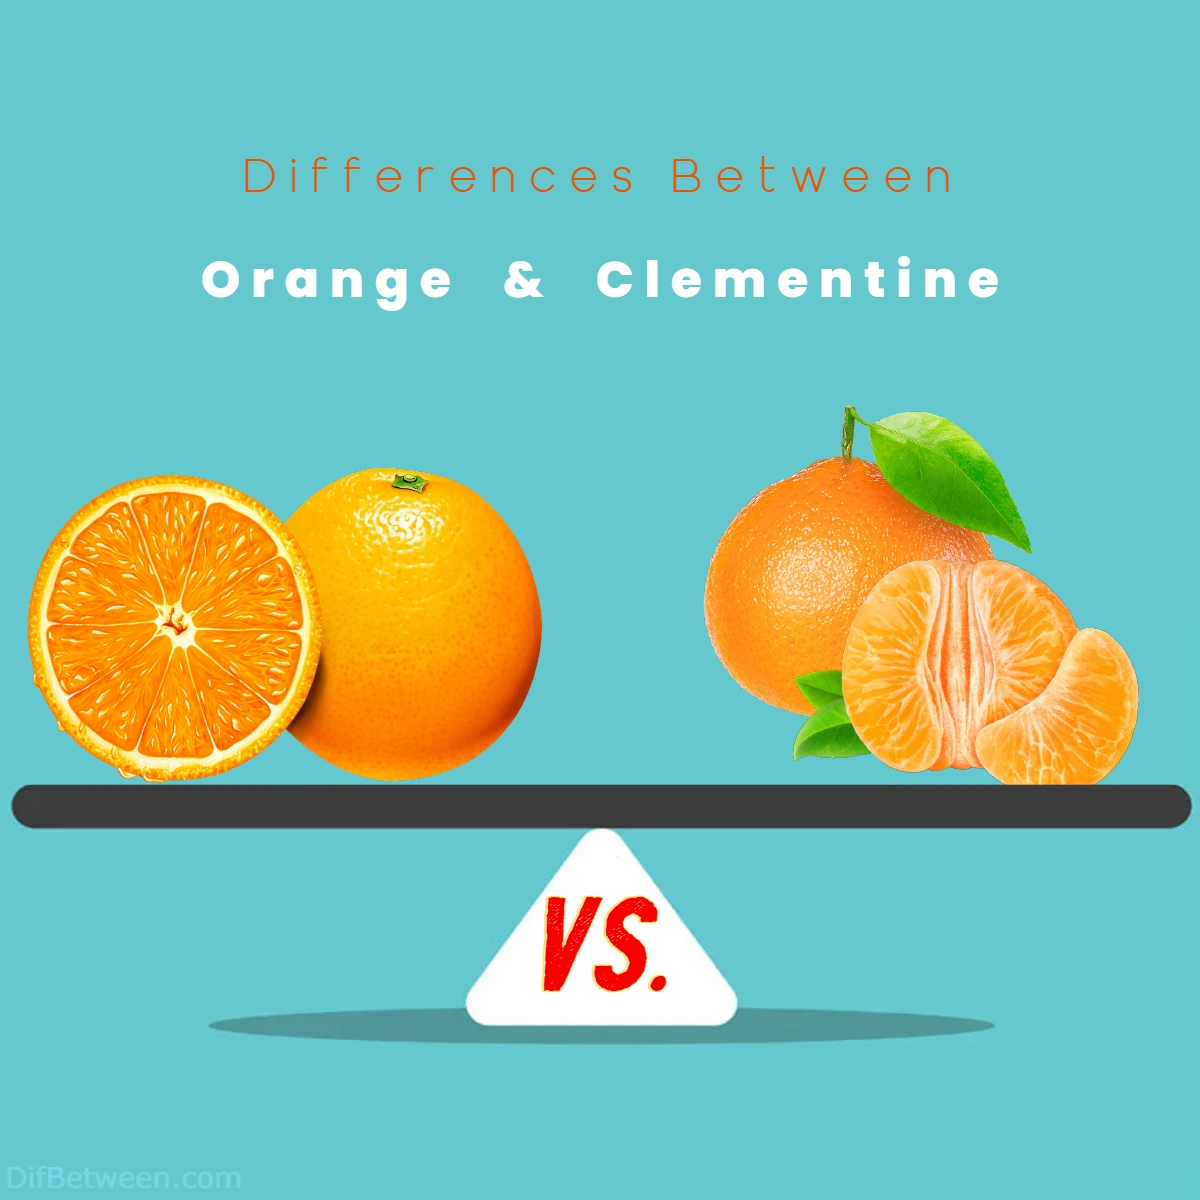 Differences Between Orange vs Clementine